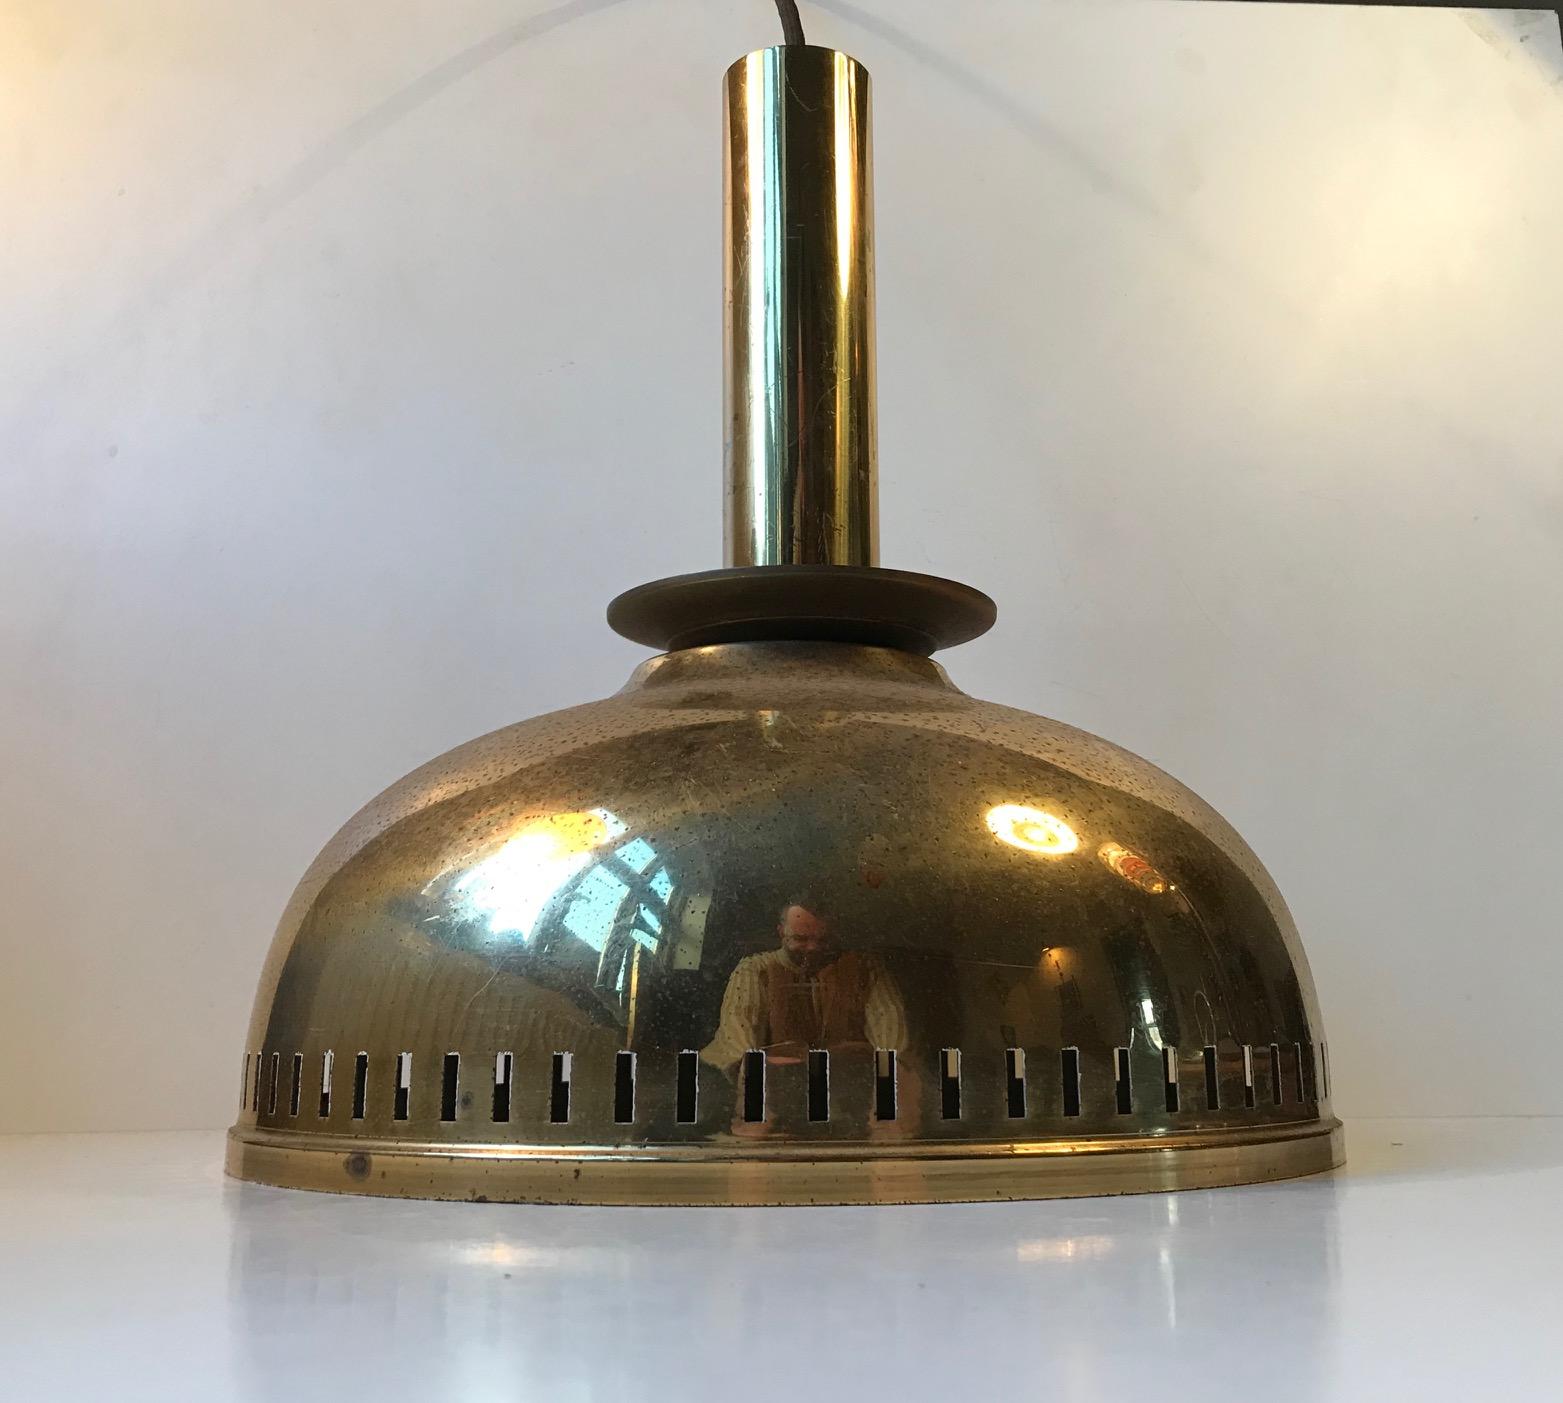 Midcentury Brass Ceiling Lamp by ASEA, 1950s (Schwedisch)